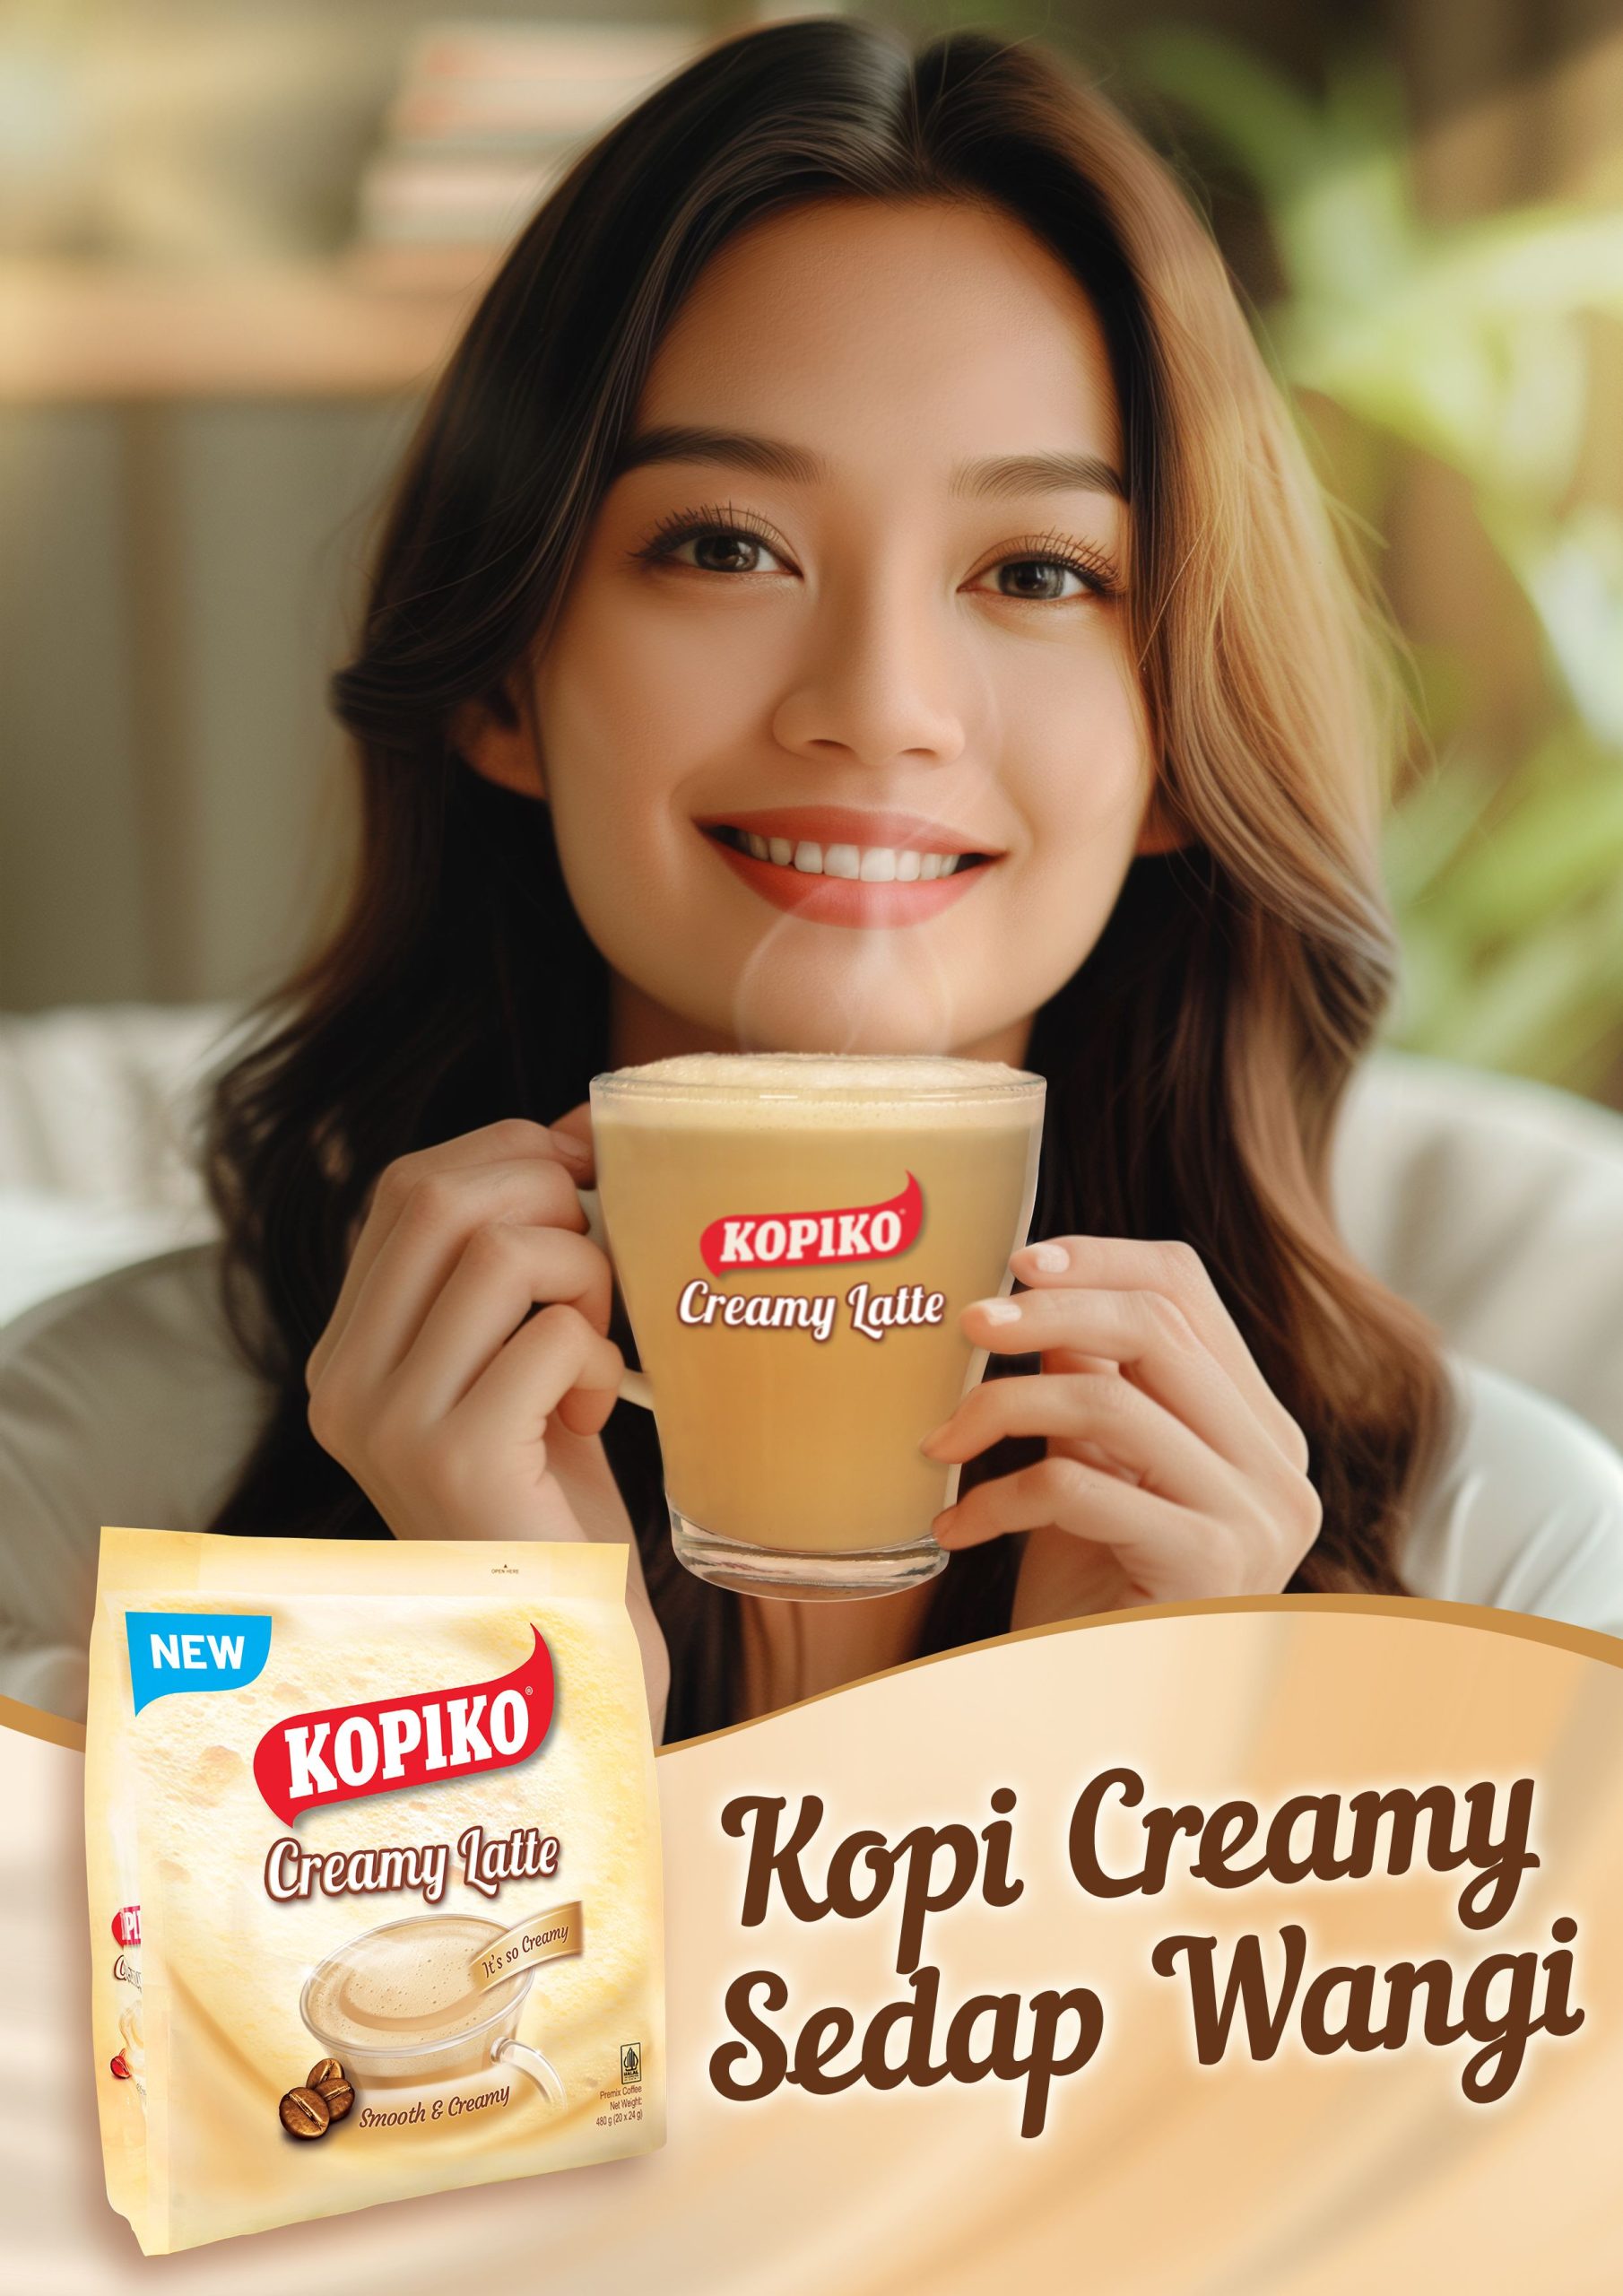 Kopiko Creamy Latte